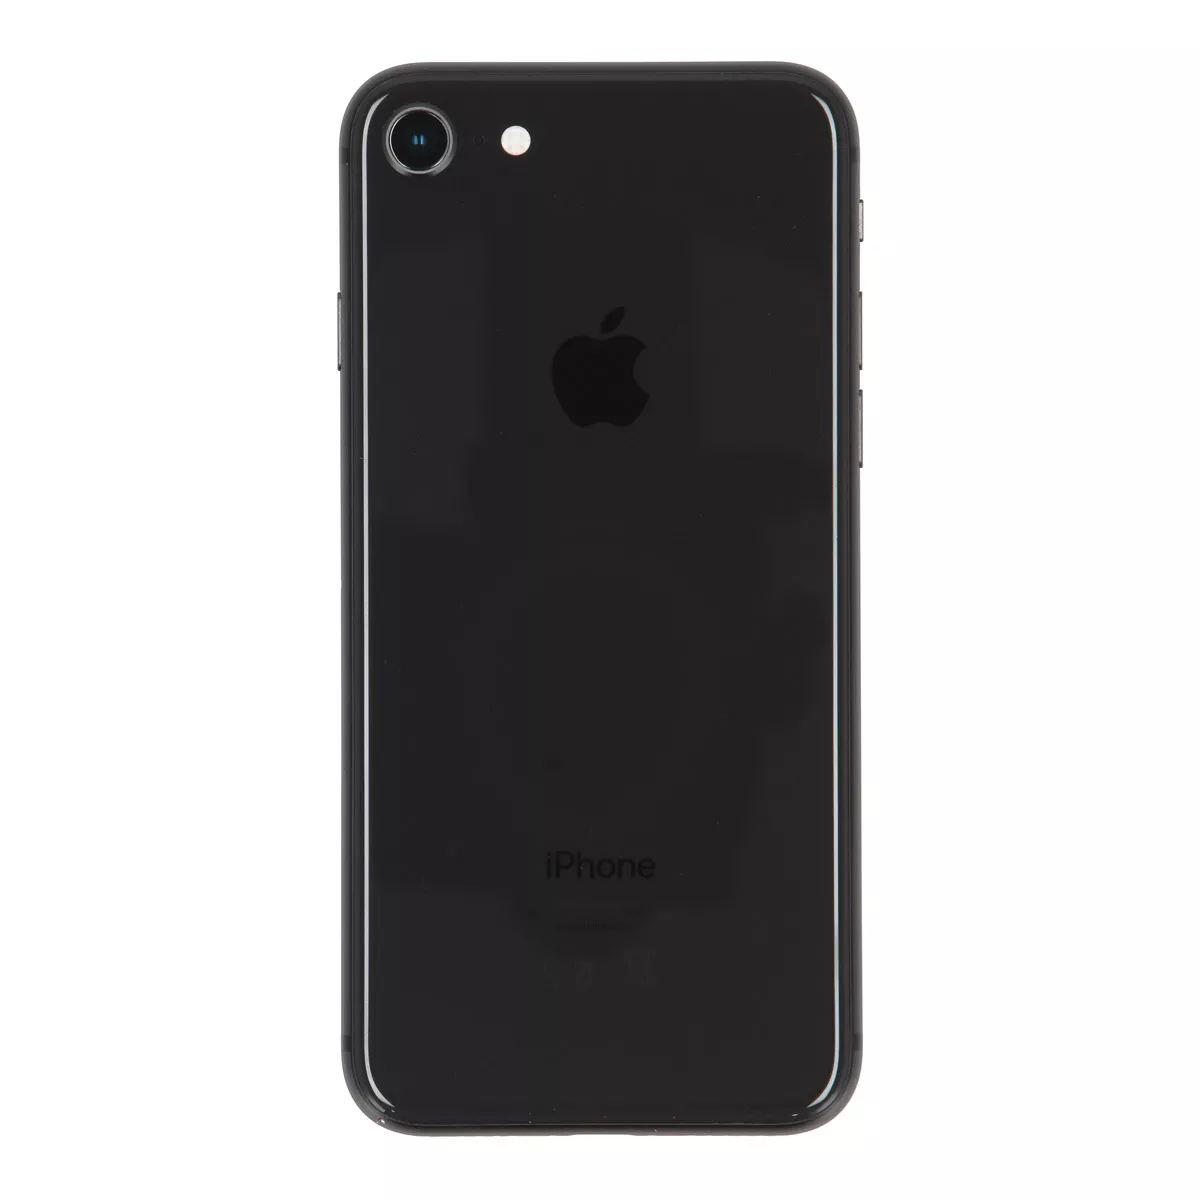 Apple iPhone 8 space gray 64 GB  B